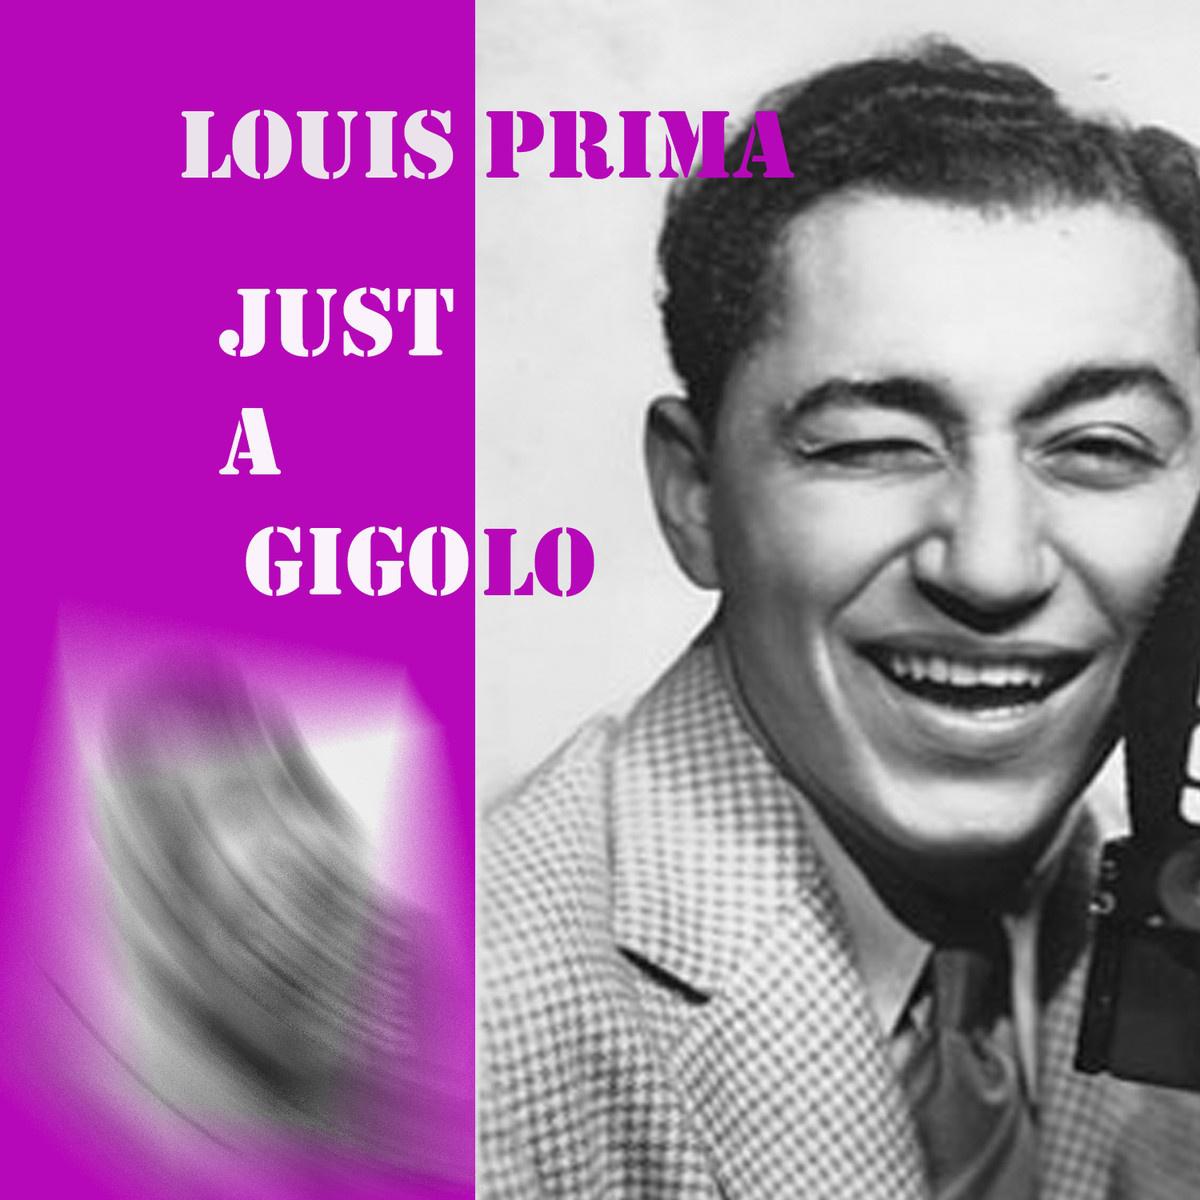 Луи прим. Луи Прима. Just a Gigolo Луи Прима. Louis-prima фото. Just a Gigolo / i Ain't got Nobody Louis prima.